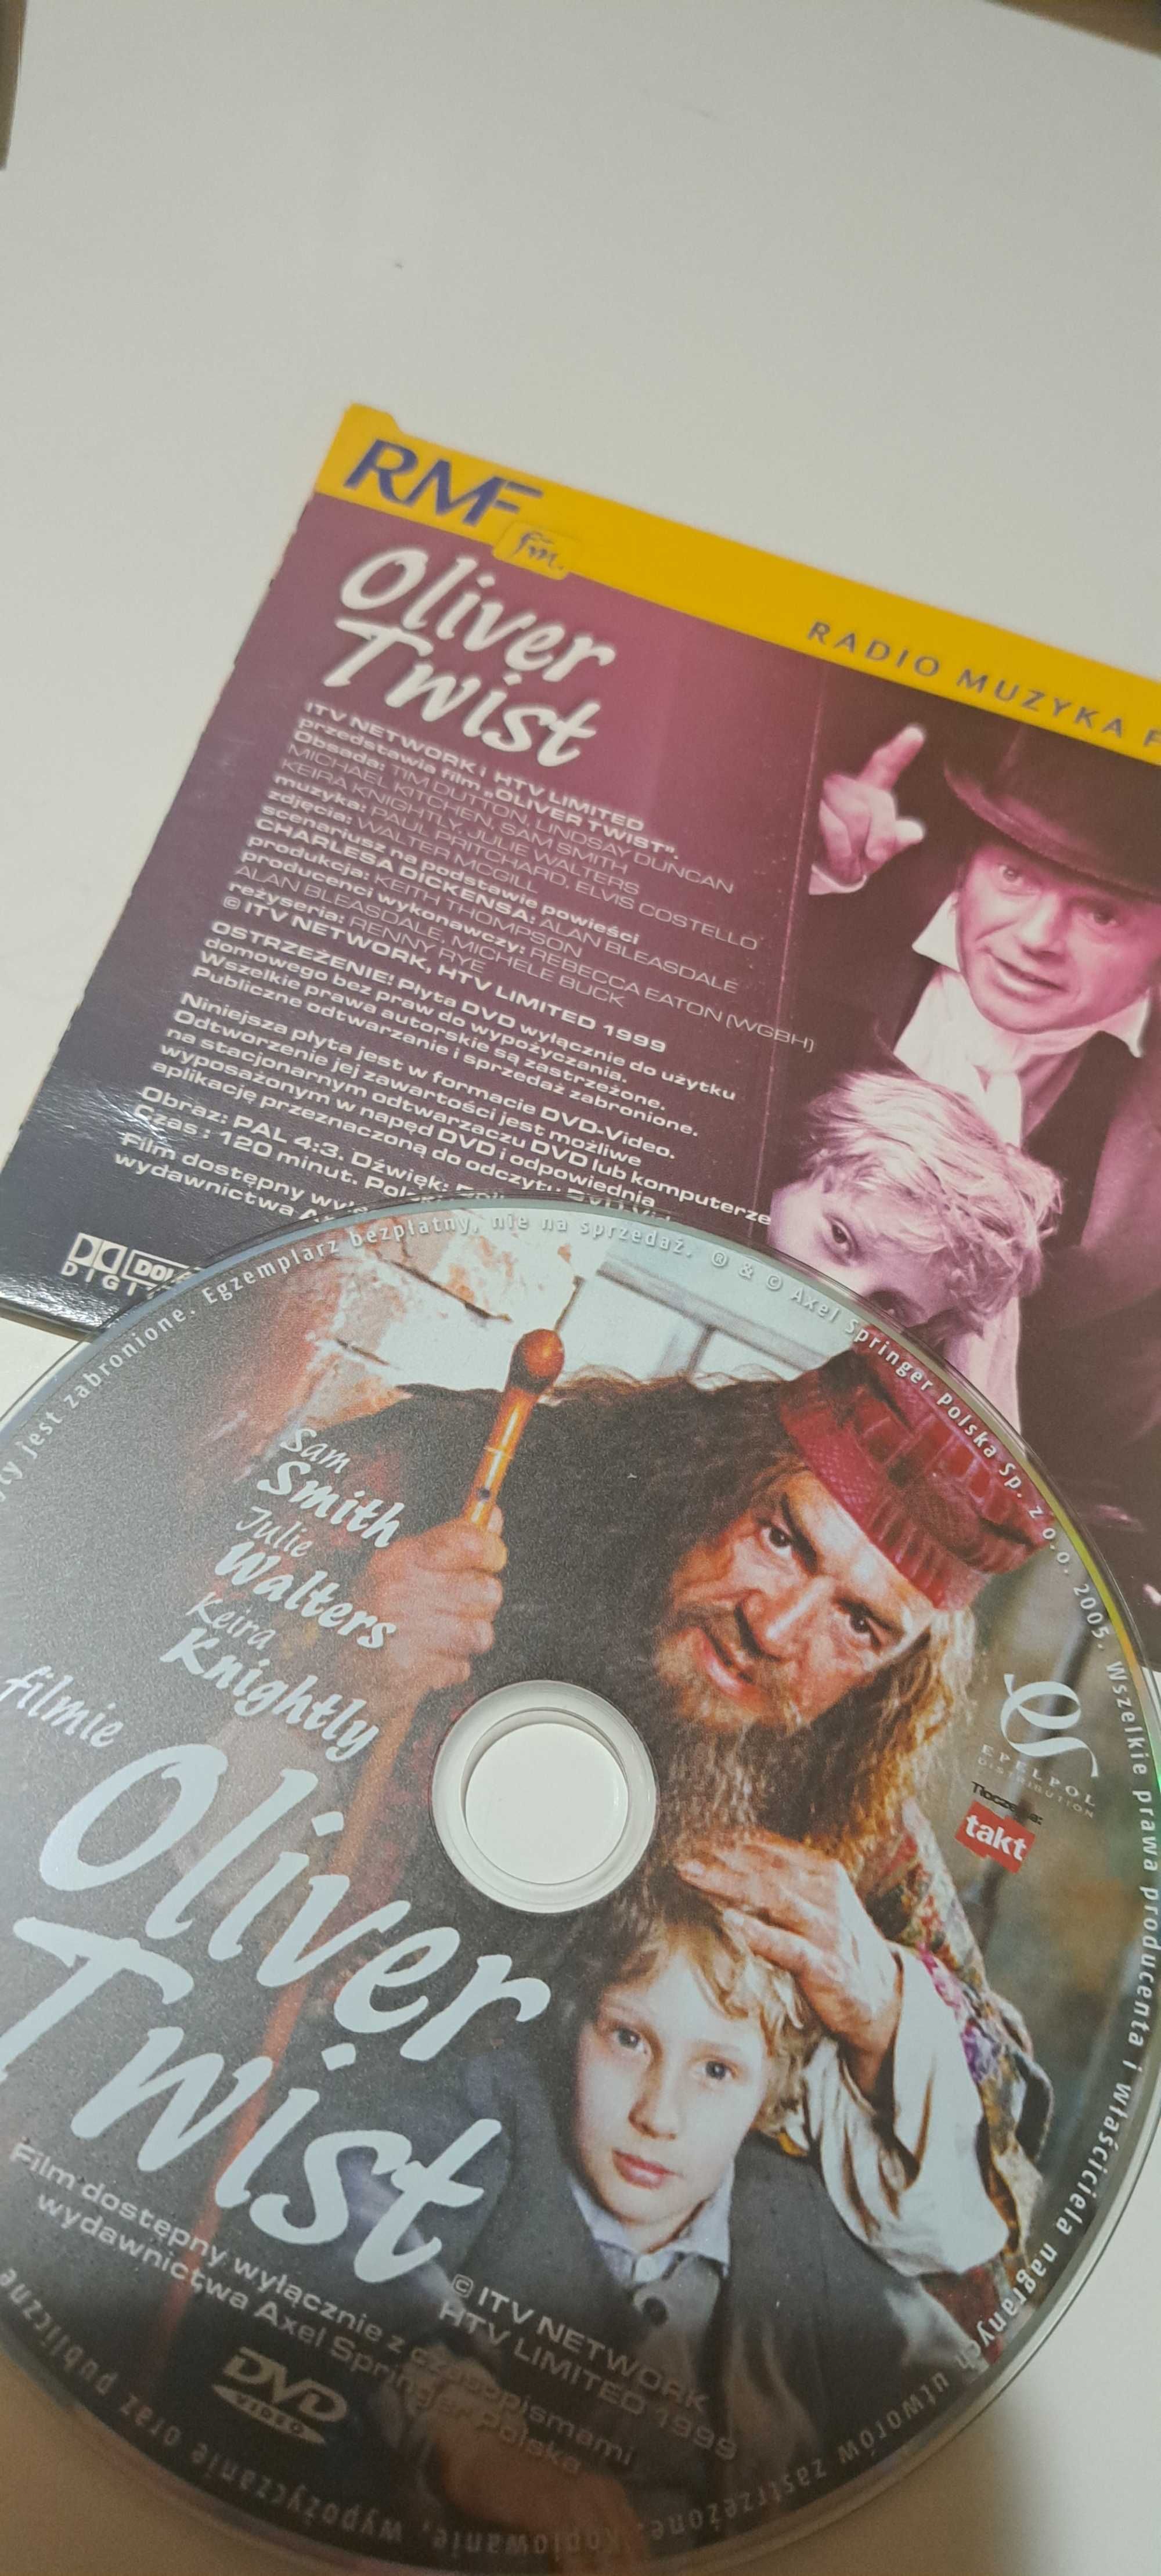 Oliver Twist film DVD